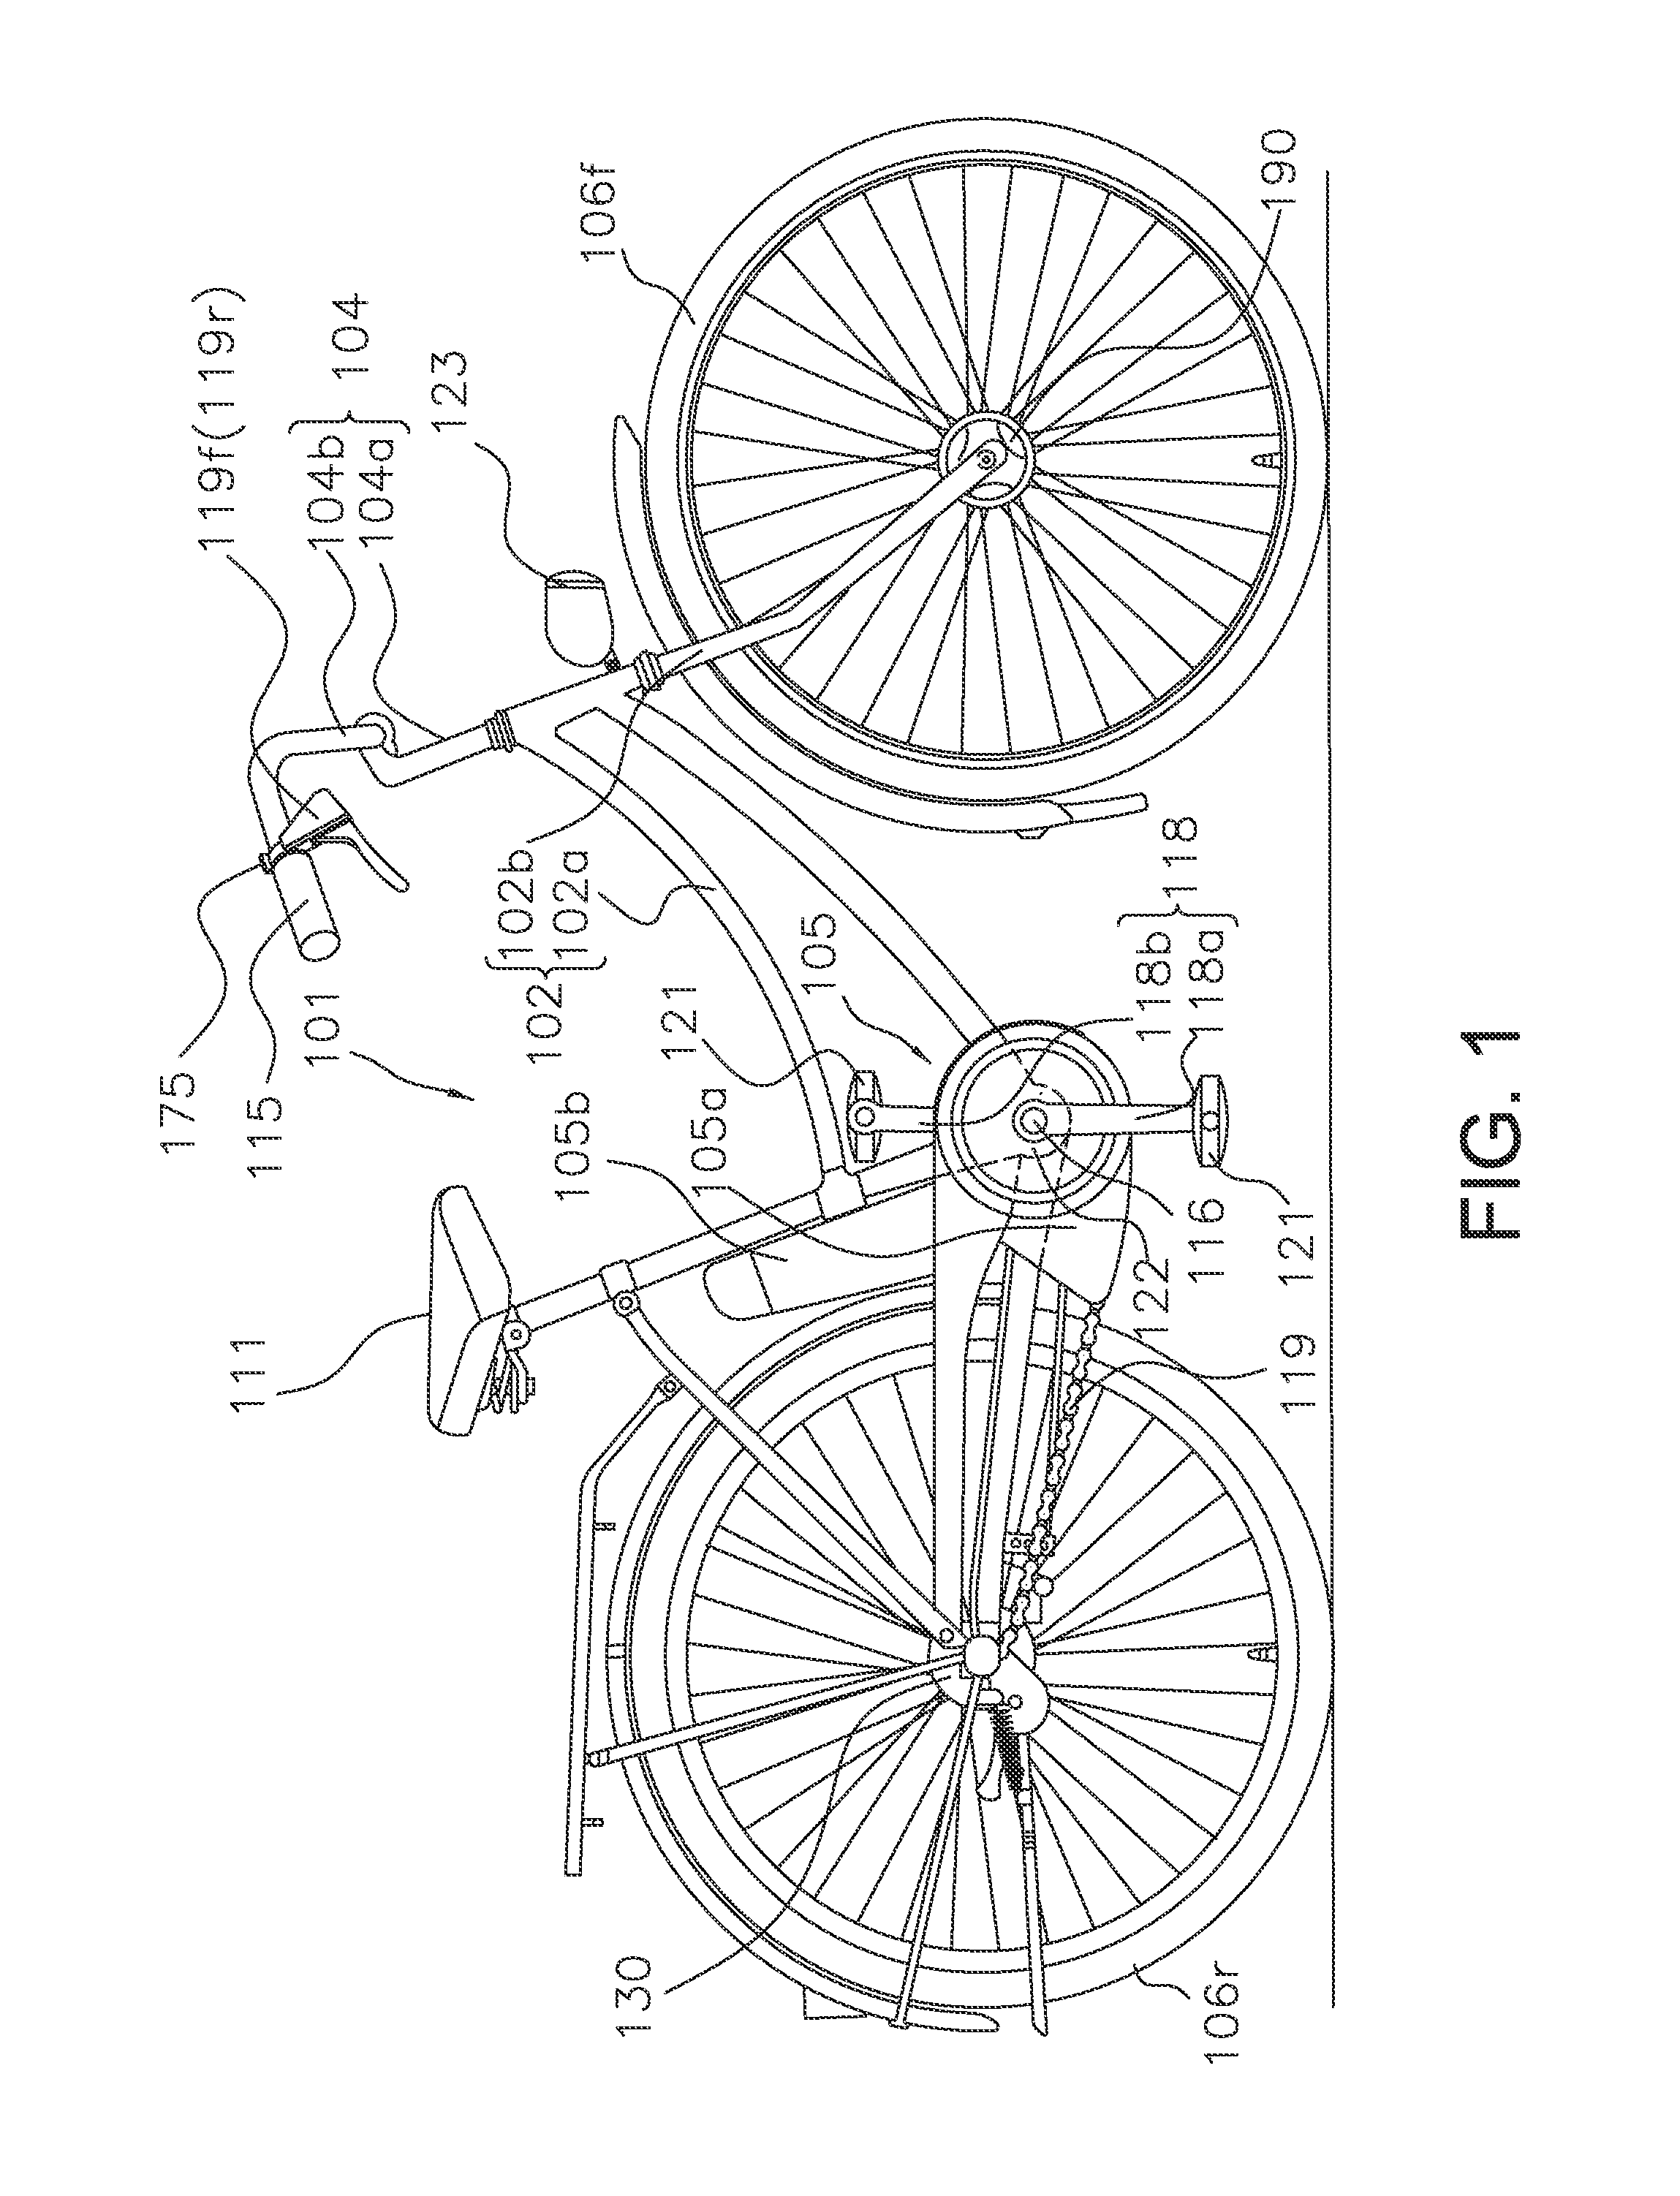 Bicycle drive apparatus